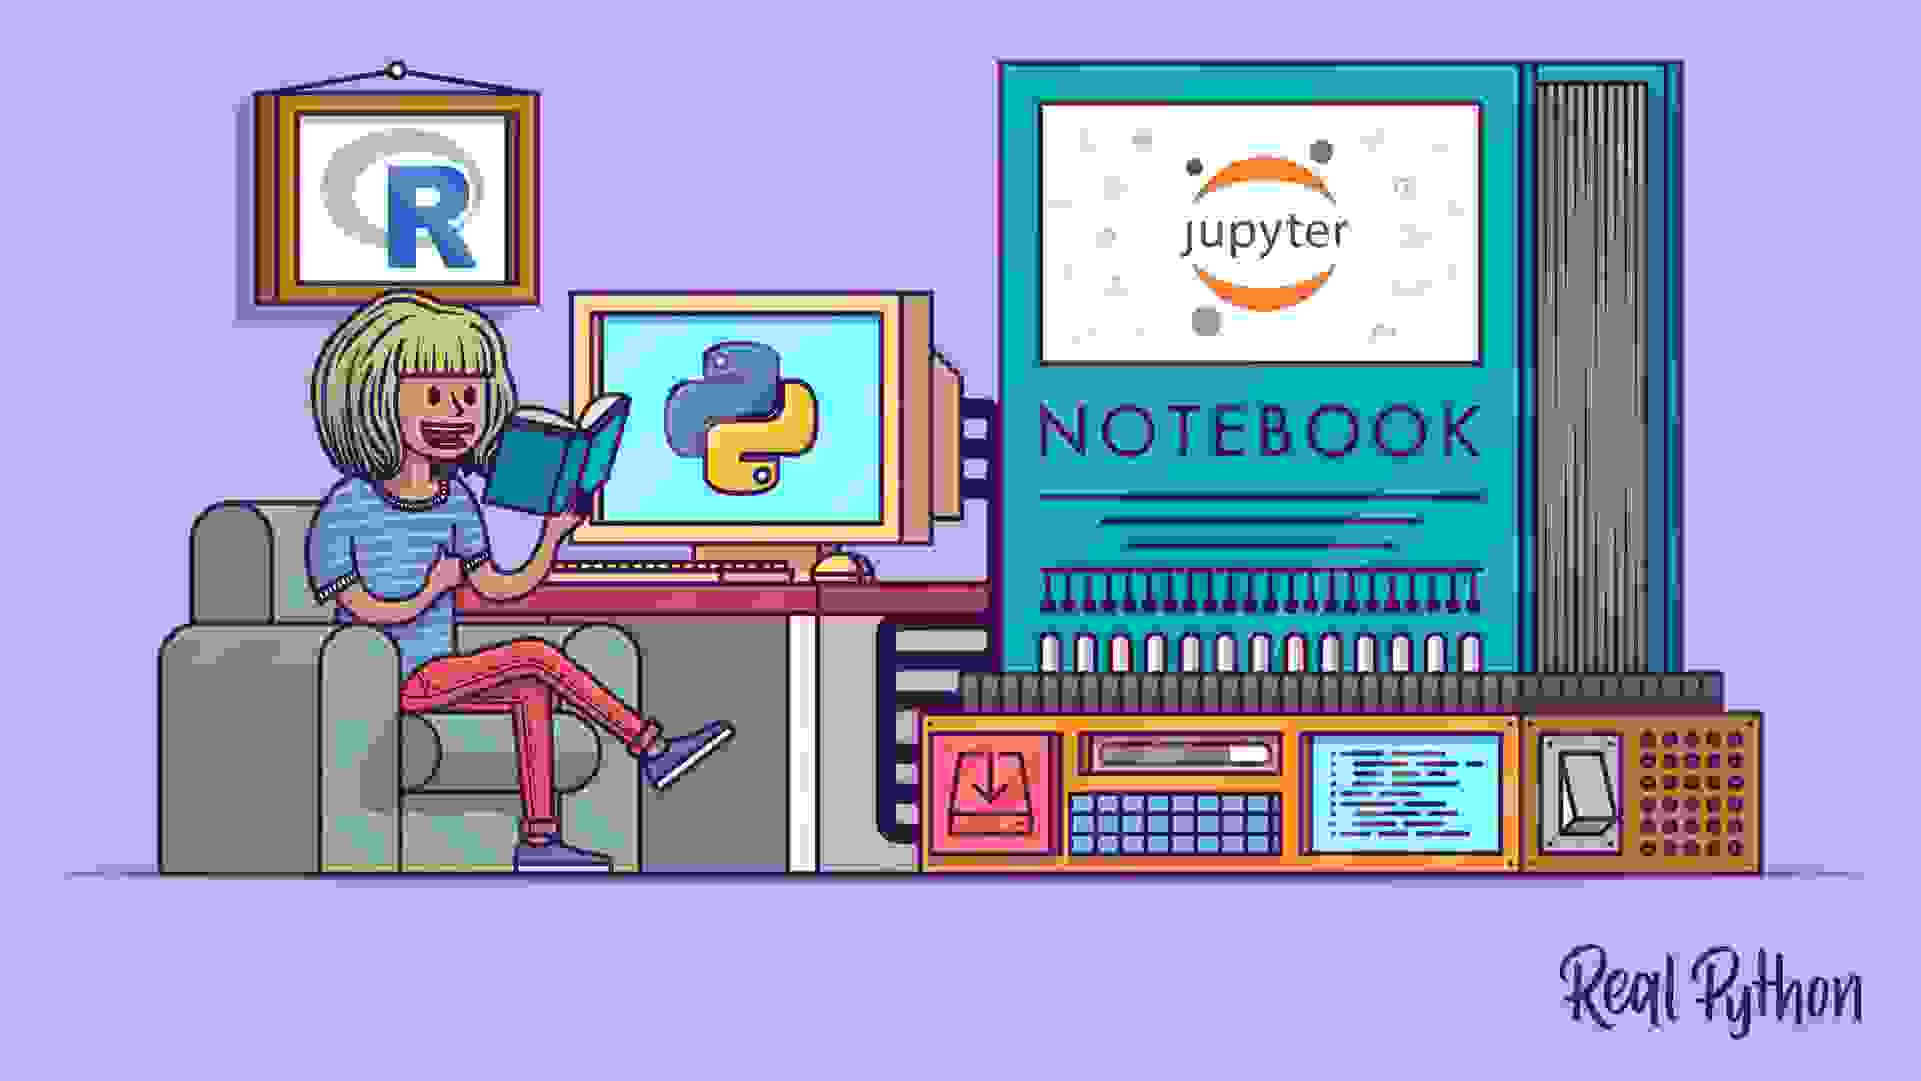 Jupyter Notebook: An Introduction